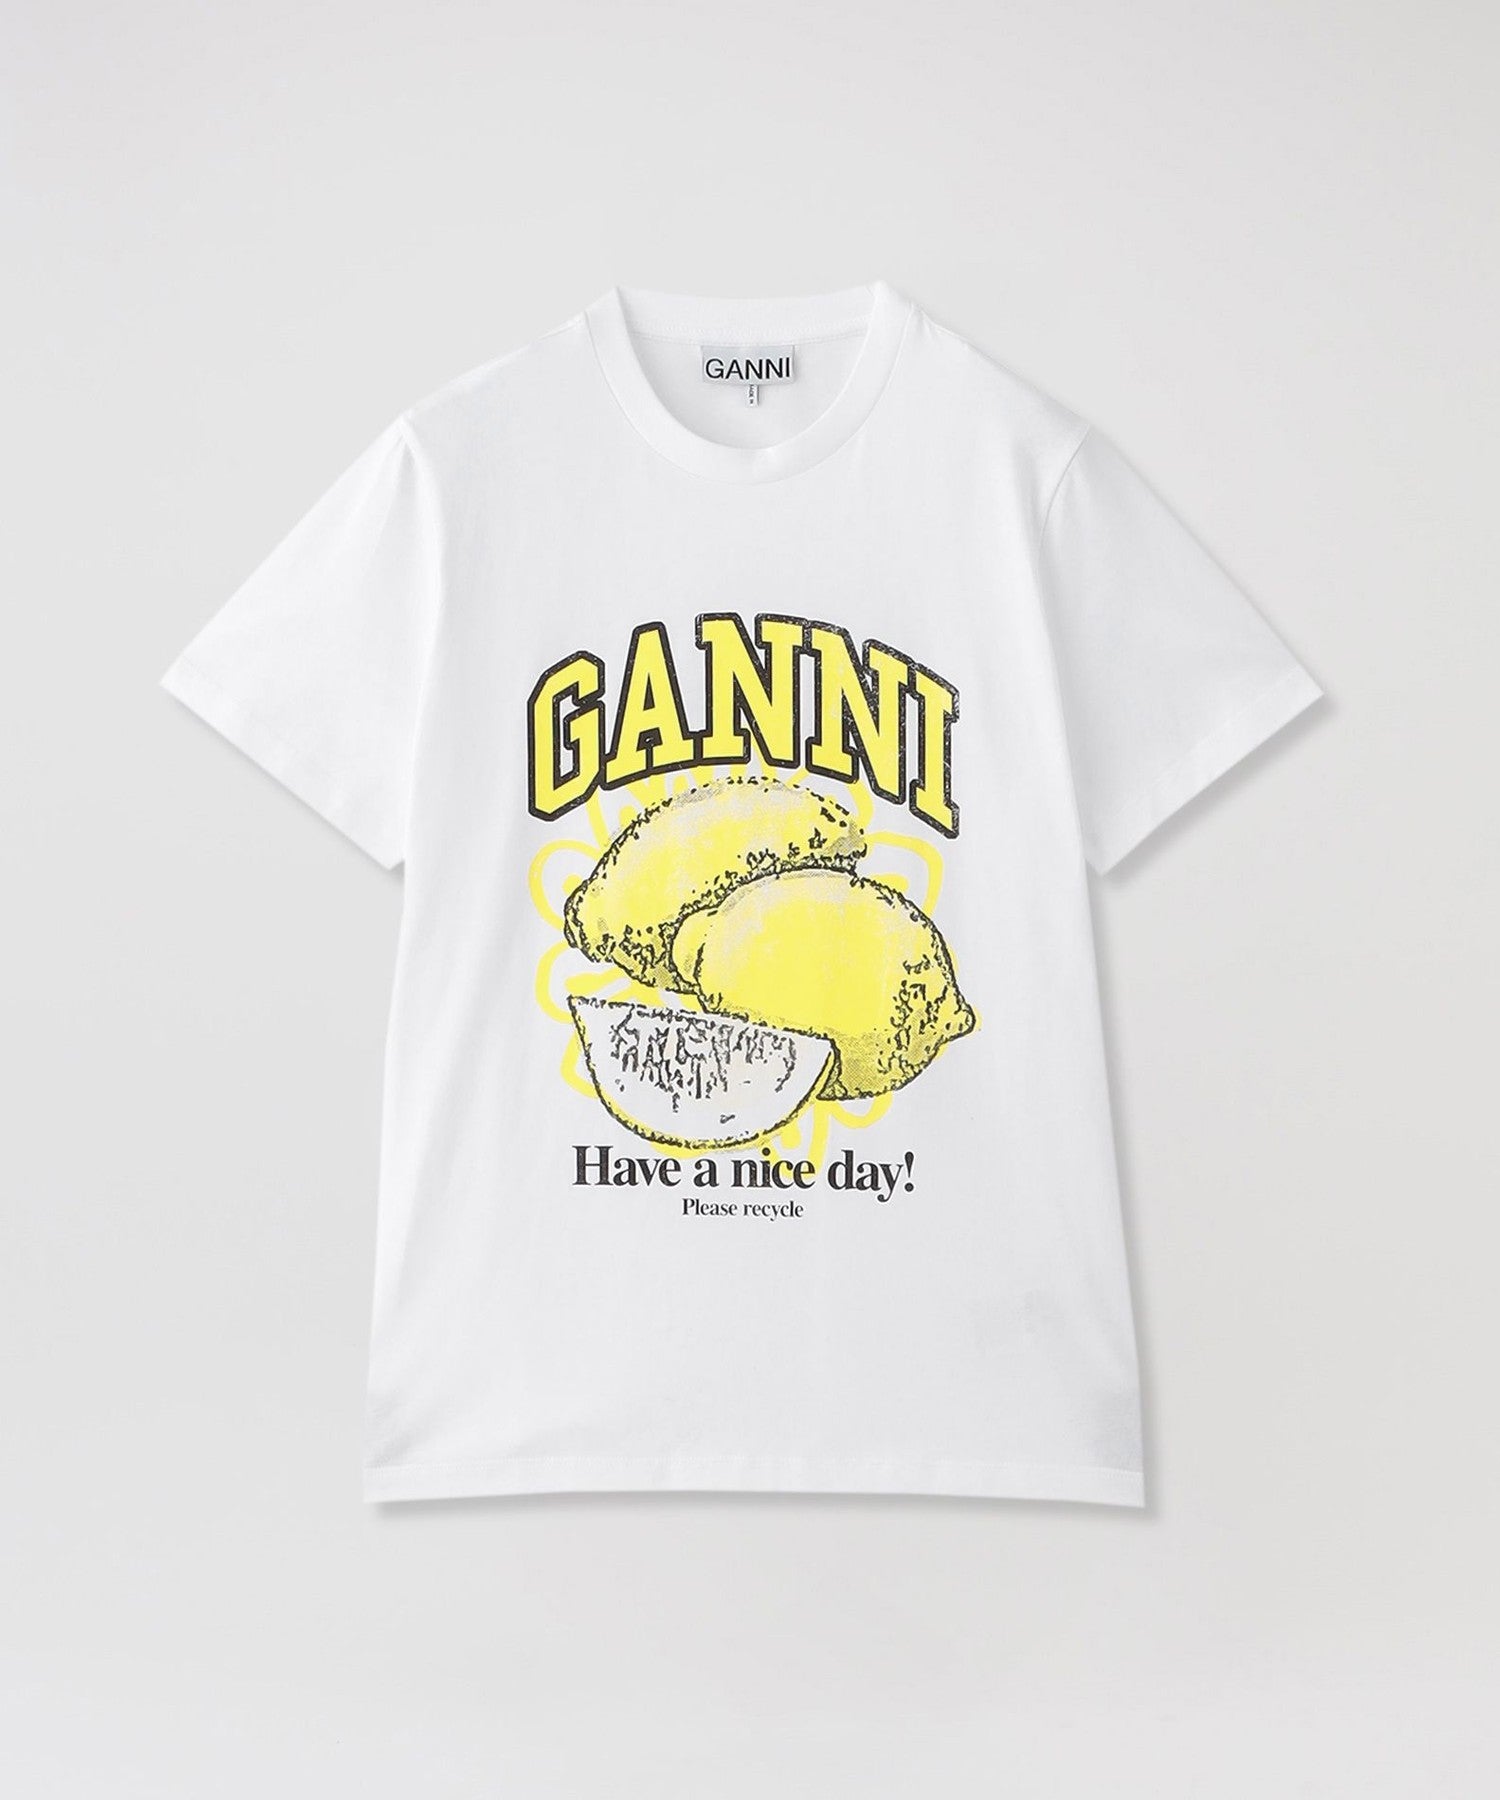 GANNI/ガニー】Tシャツ BASIC JERSEY LEMON RELAXED T-SHIRT T3768 151